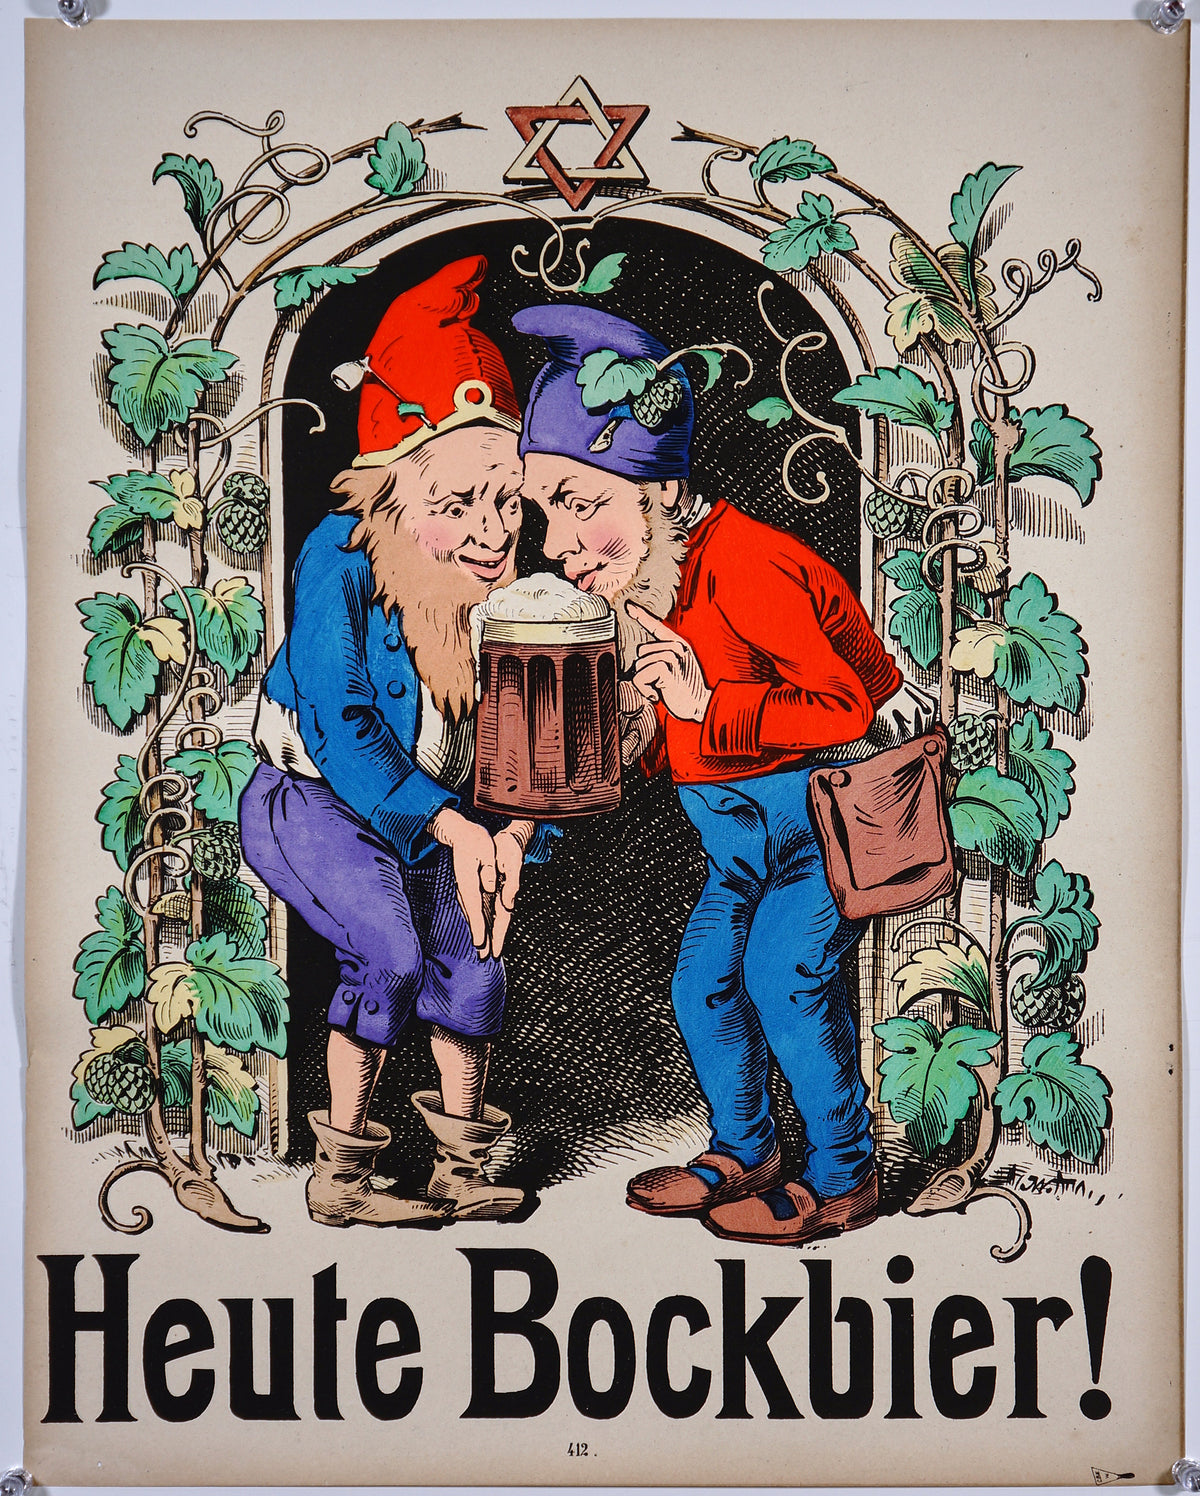 Wissembourg - Heute bockbier! - Authentic Vintage Poster